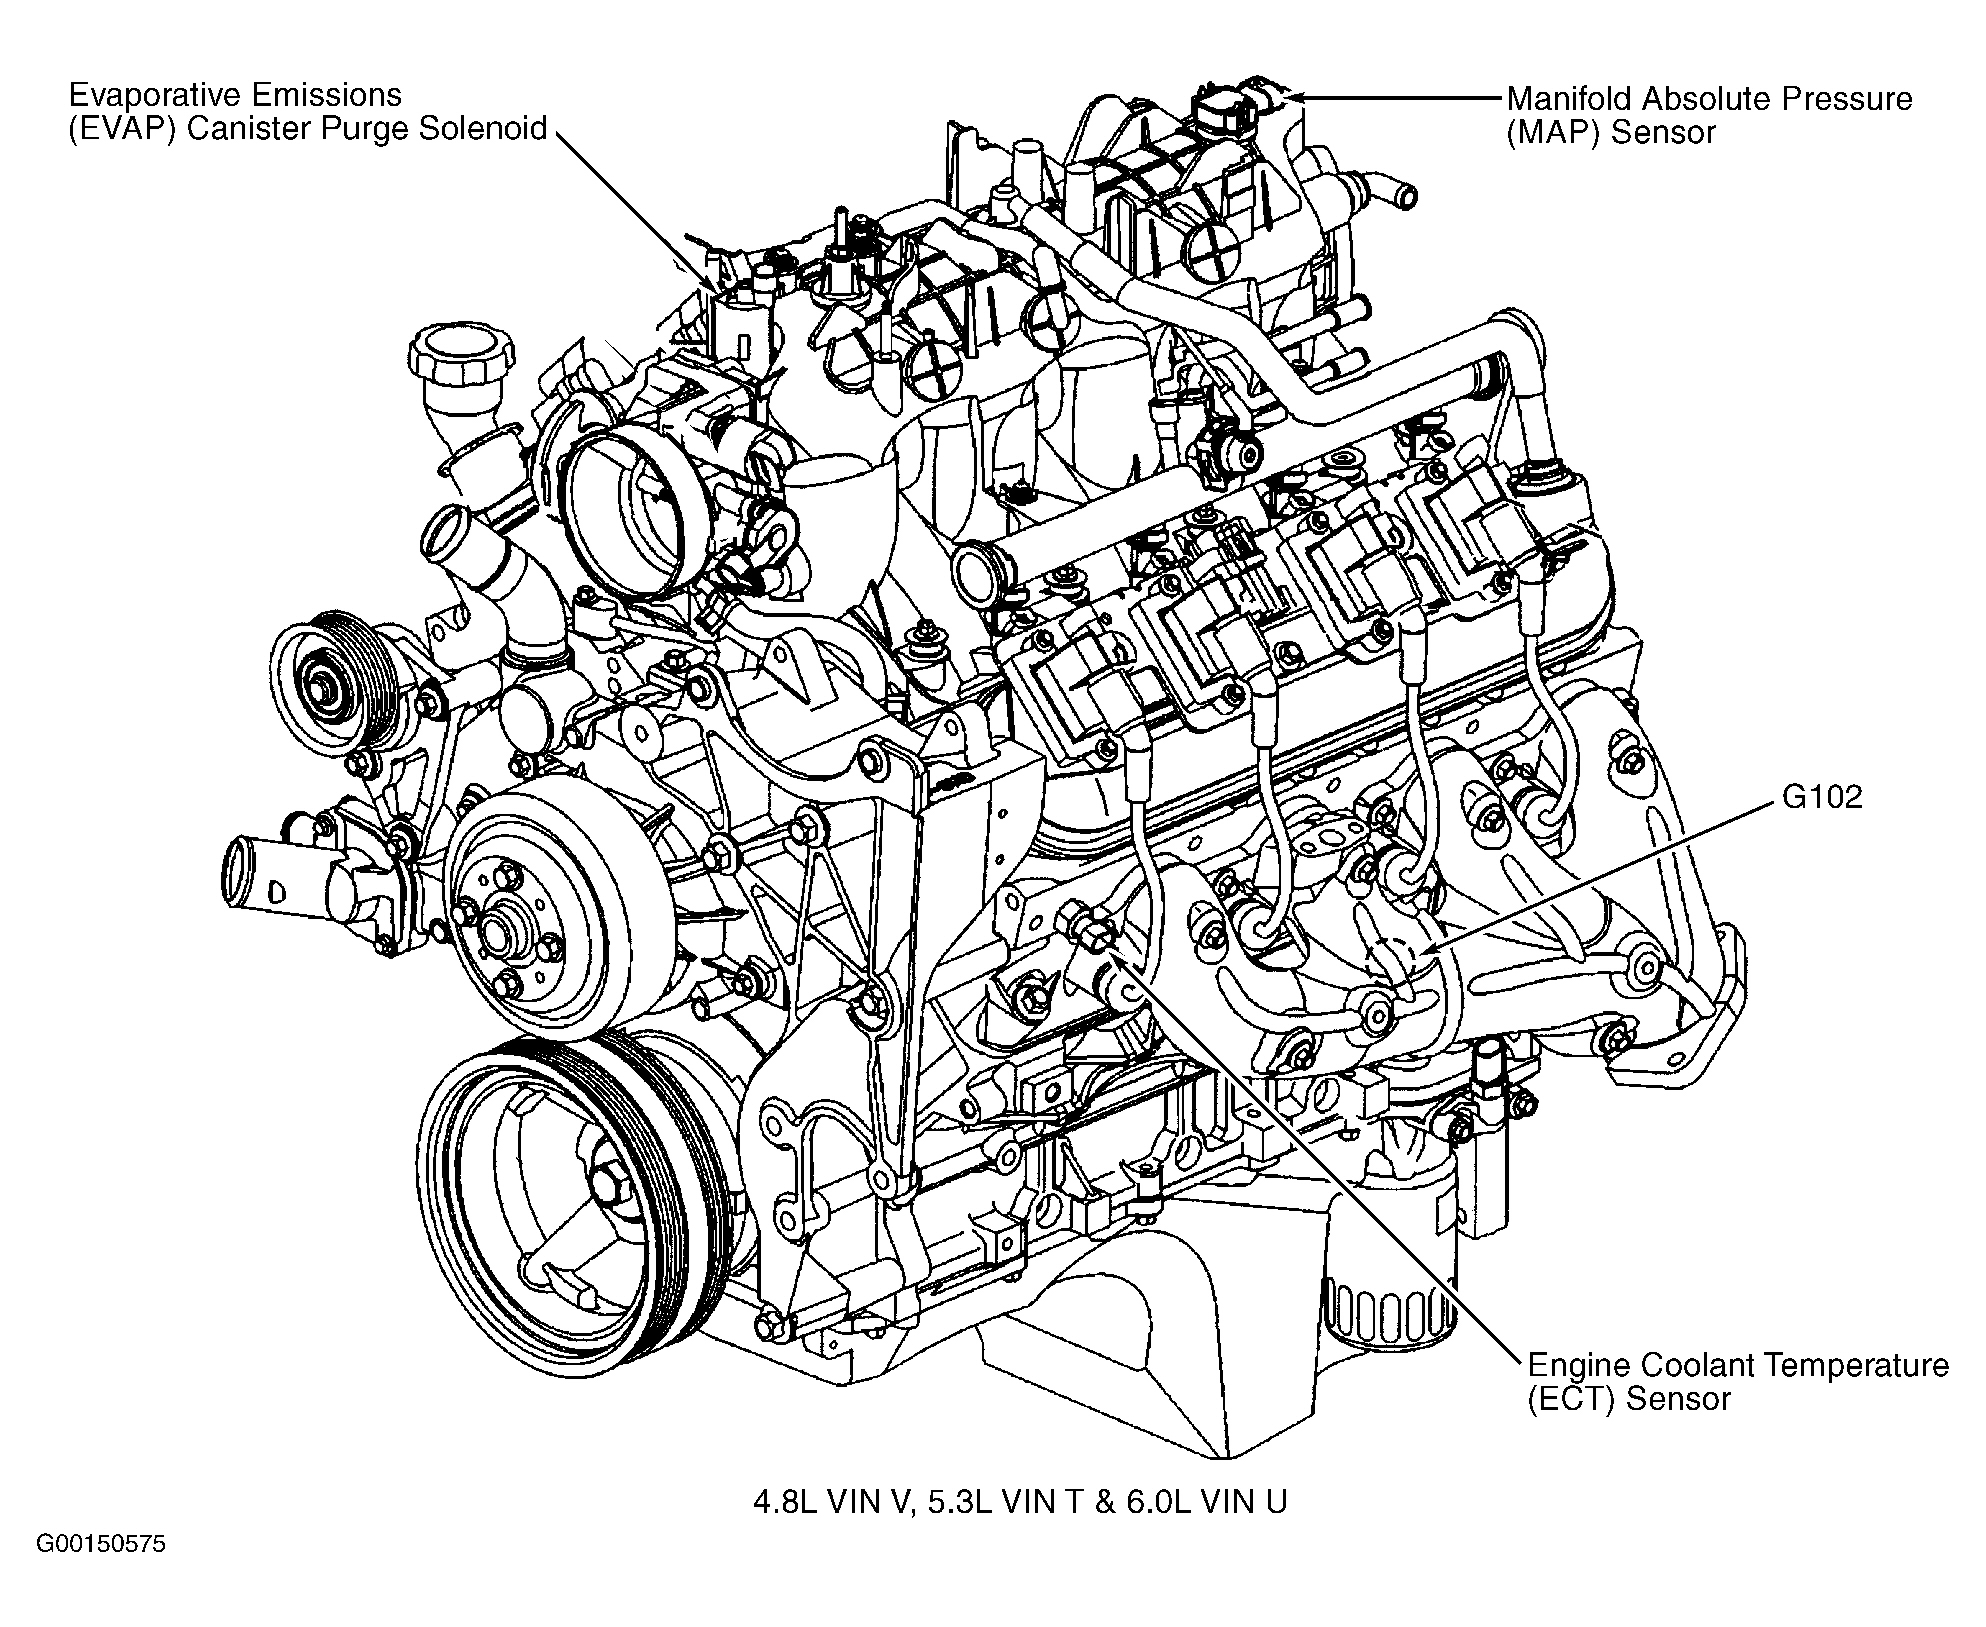 GMC Yukon 2003 - Component Locations -  Left Side Of Engine (4.8L VIN V, 5.3L VIN T & 6.0L VIN U)